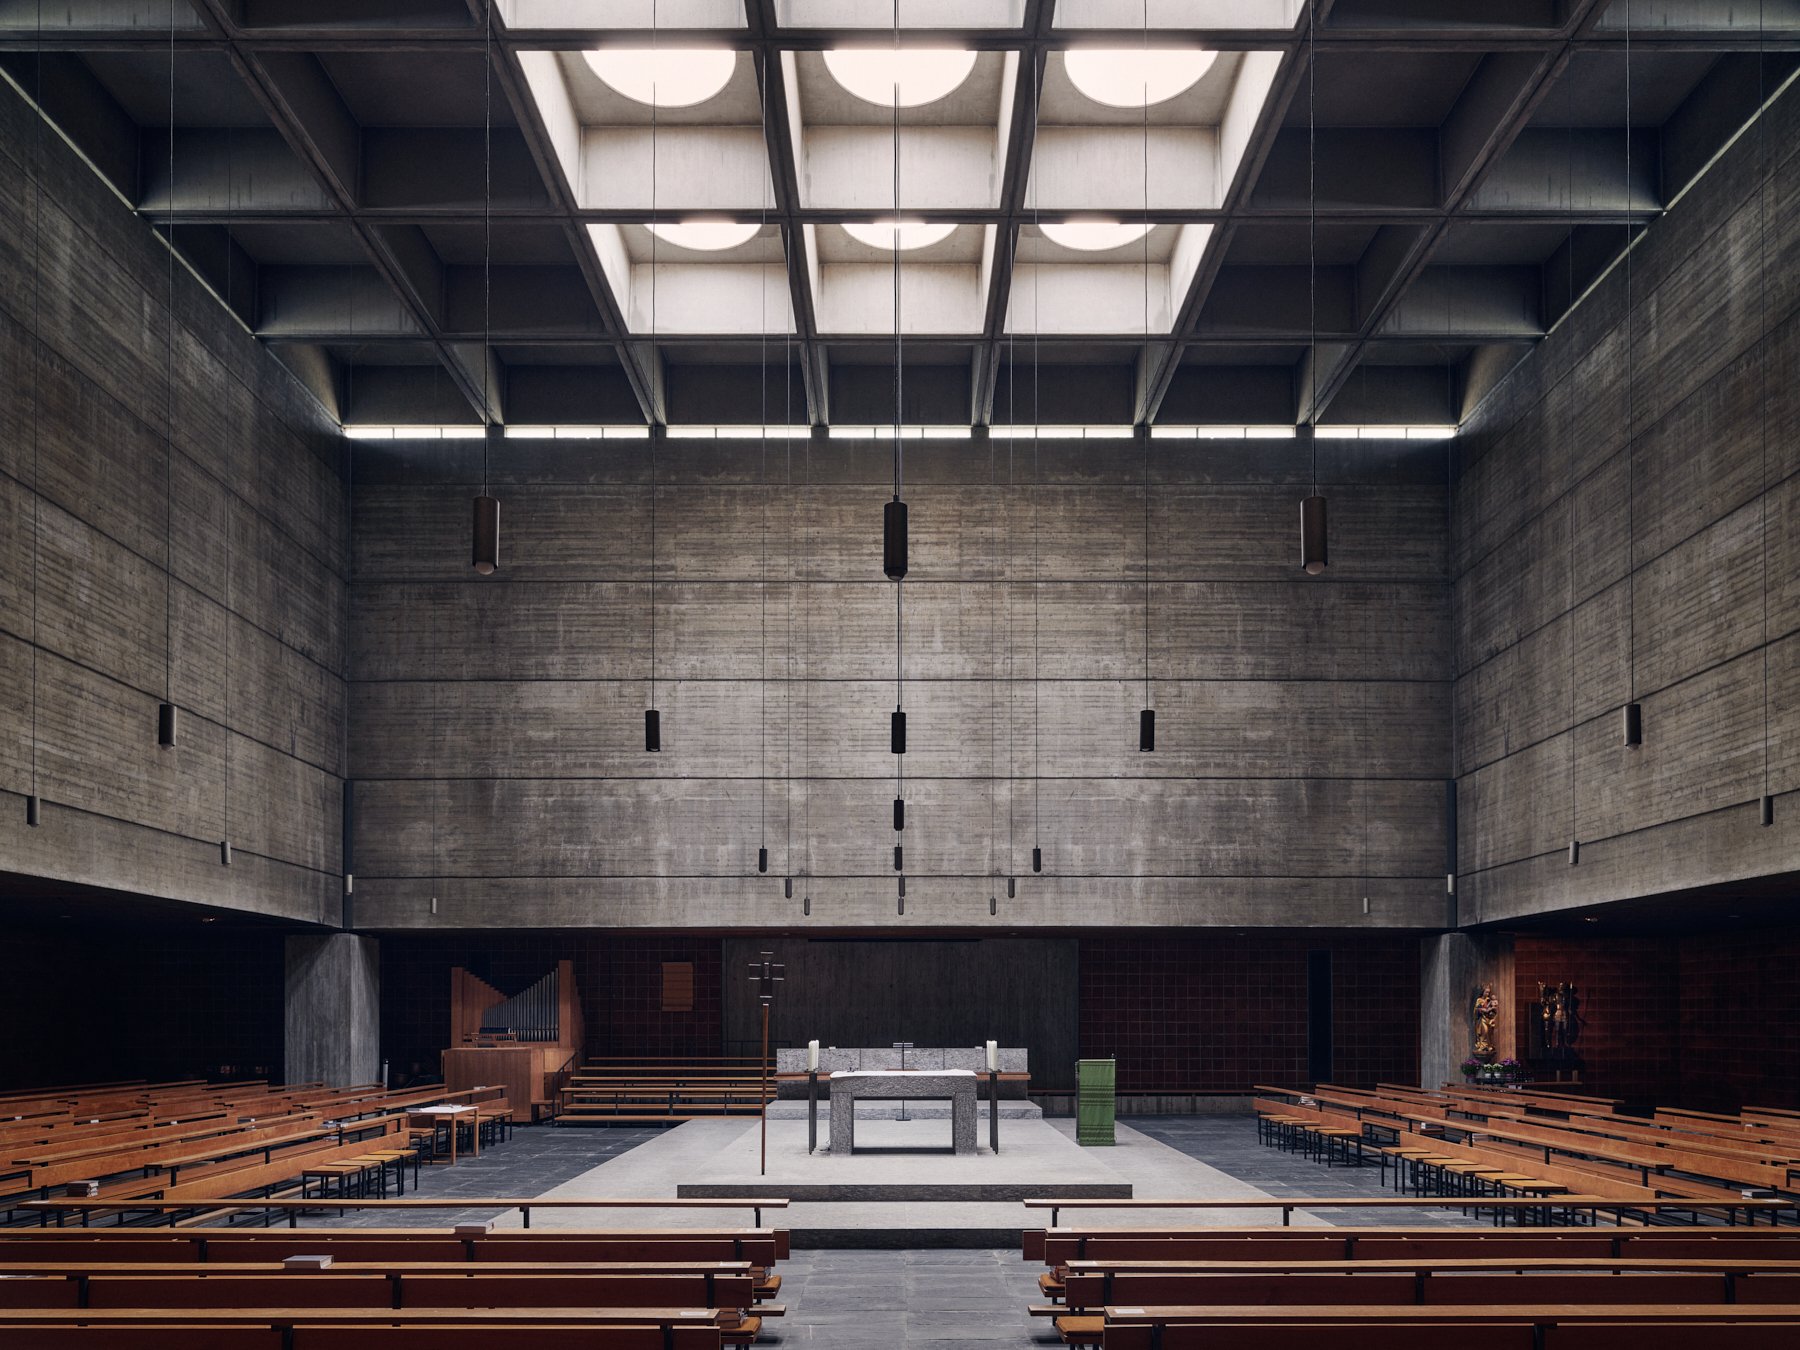 St. Mauritius Kirche - Munich, Germany -  Herbert Groethuysen, 1966-1967